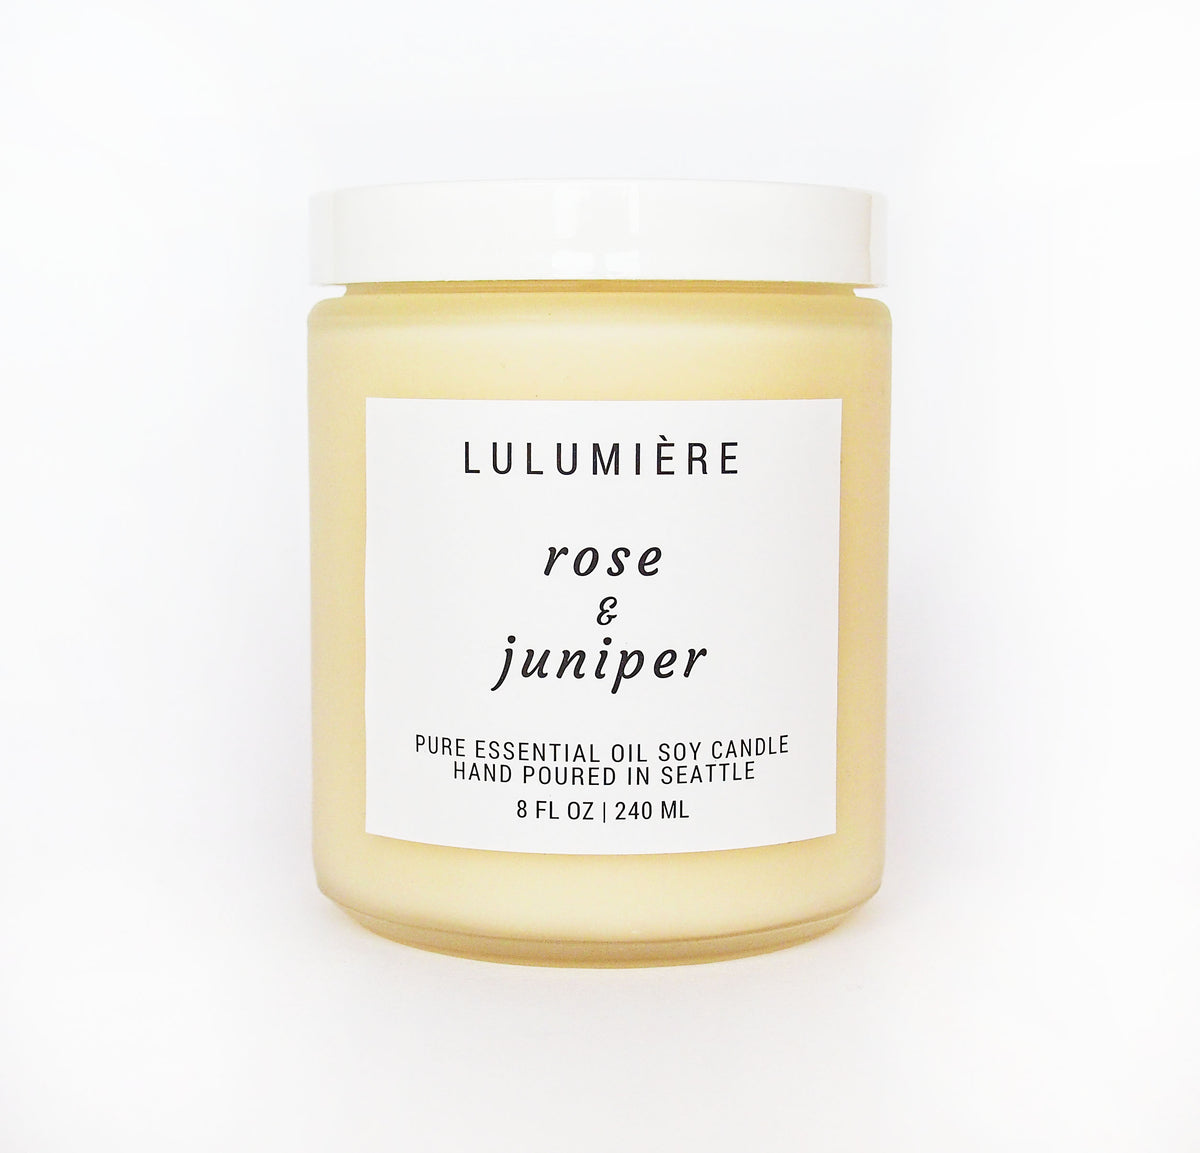 Rose juniper model